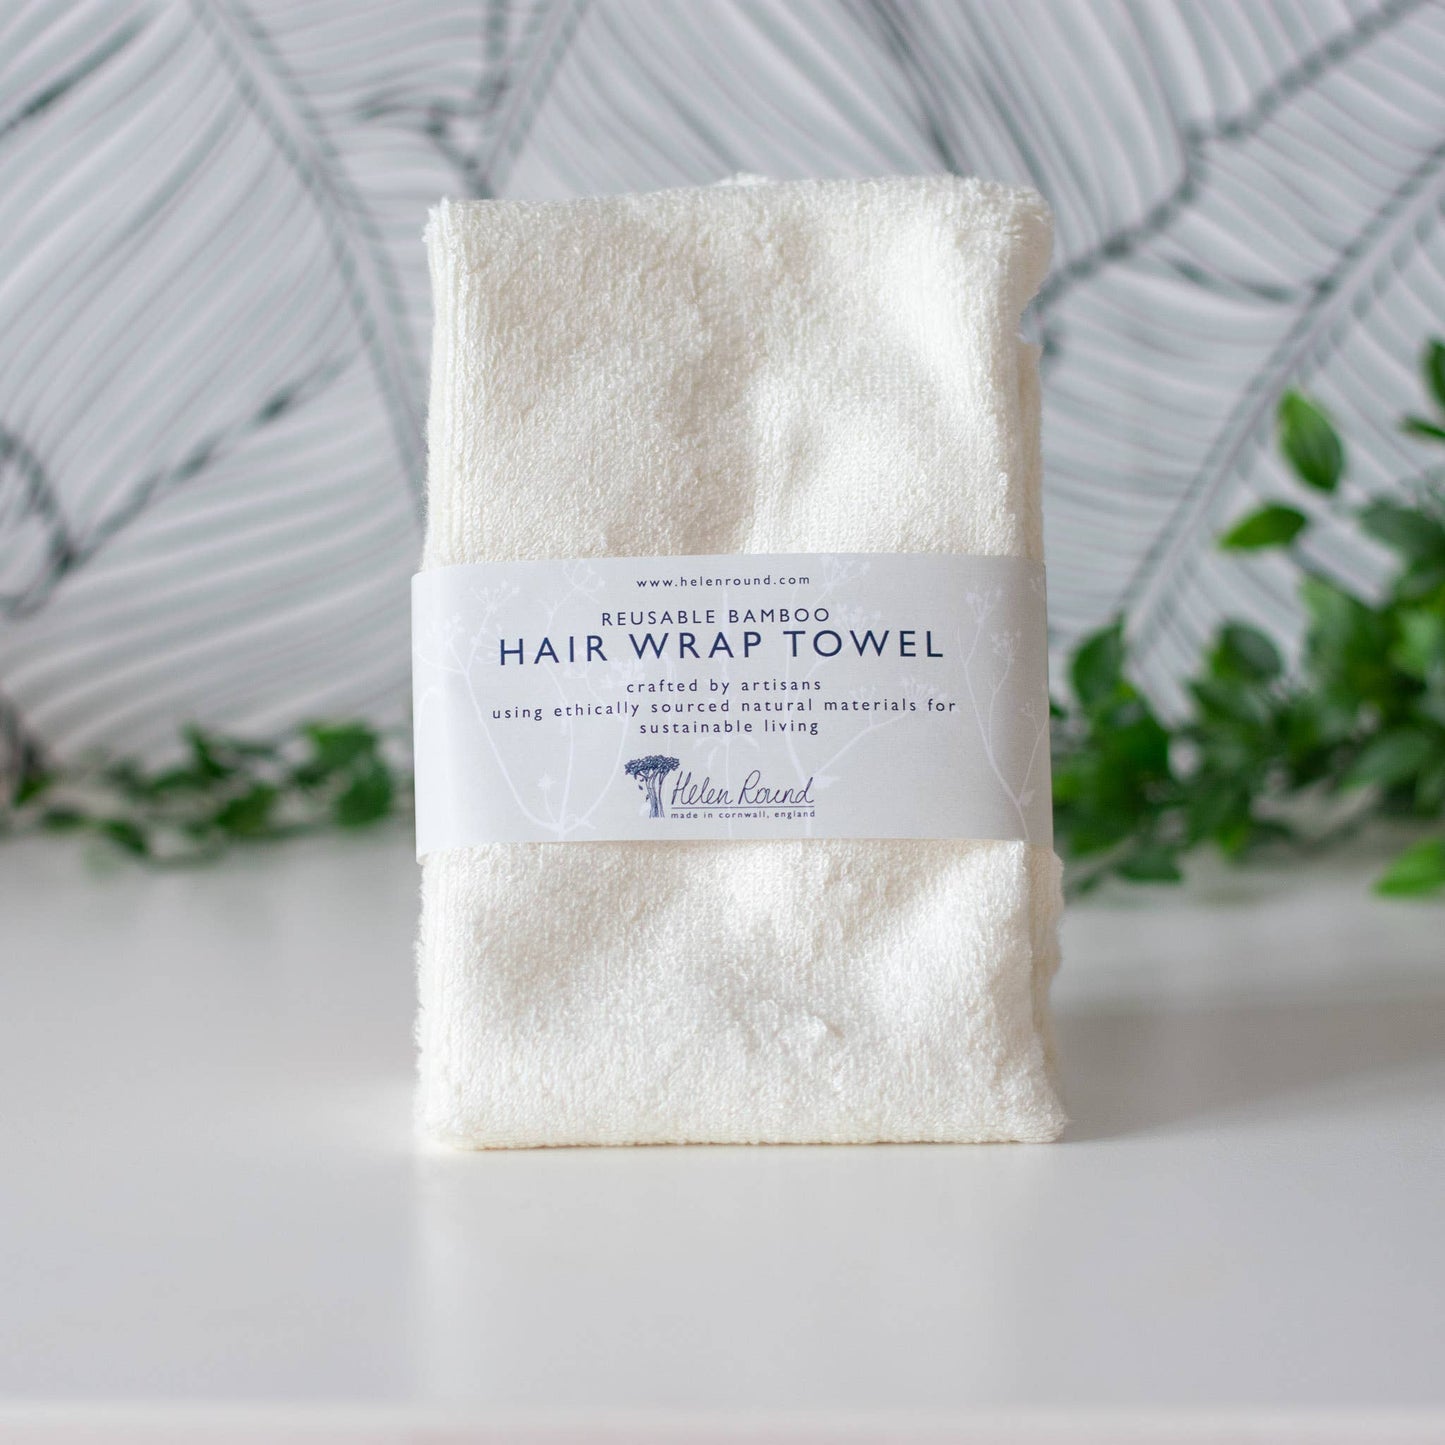 Bamboo Hair Wrap Towel, Super Soft For Drying Hair: Reusable Bamboo Hair Wrap